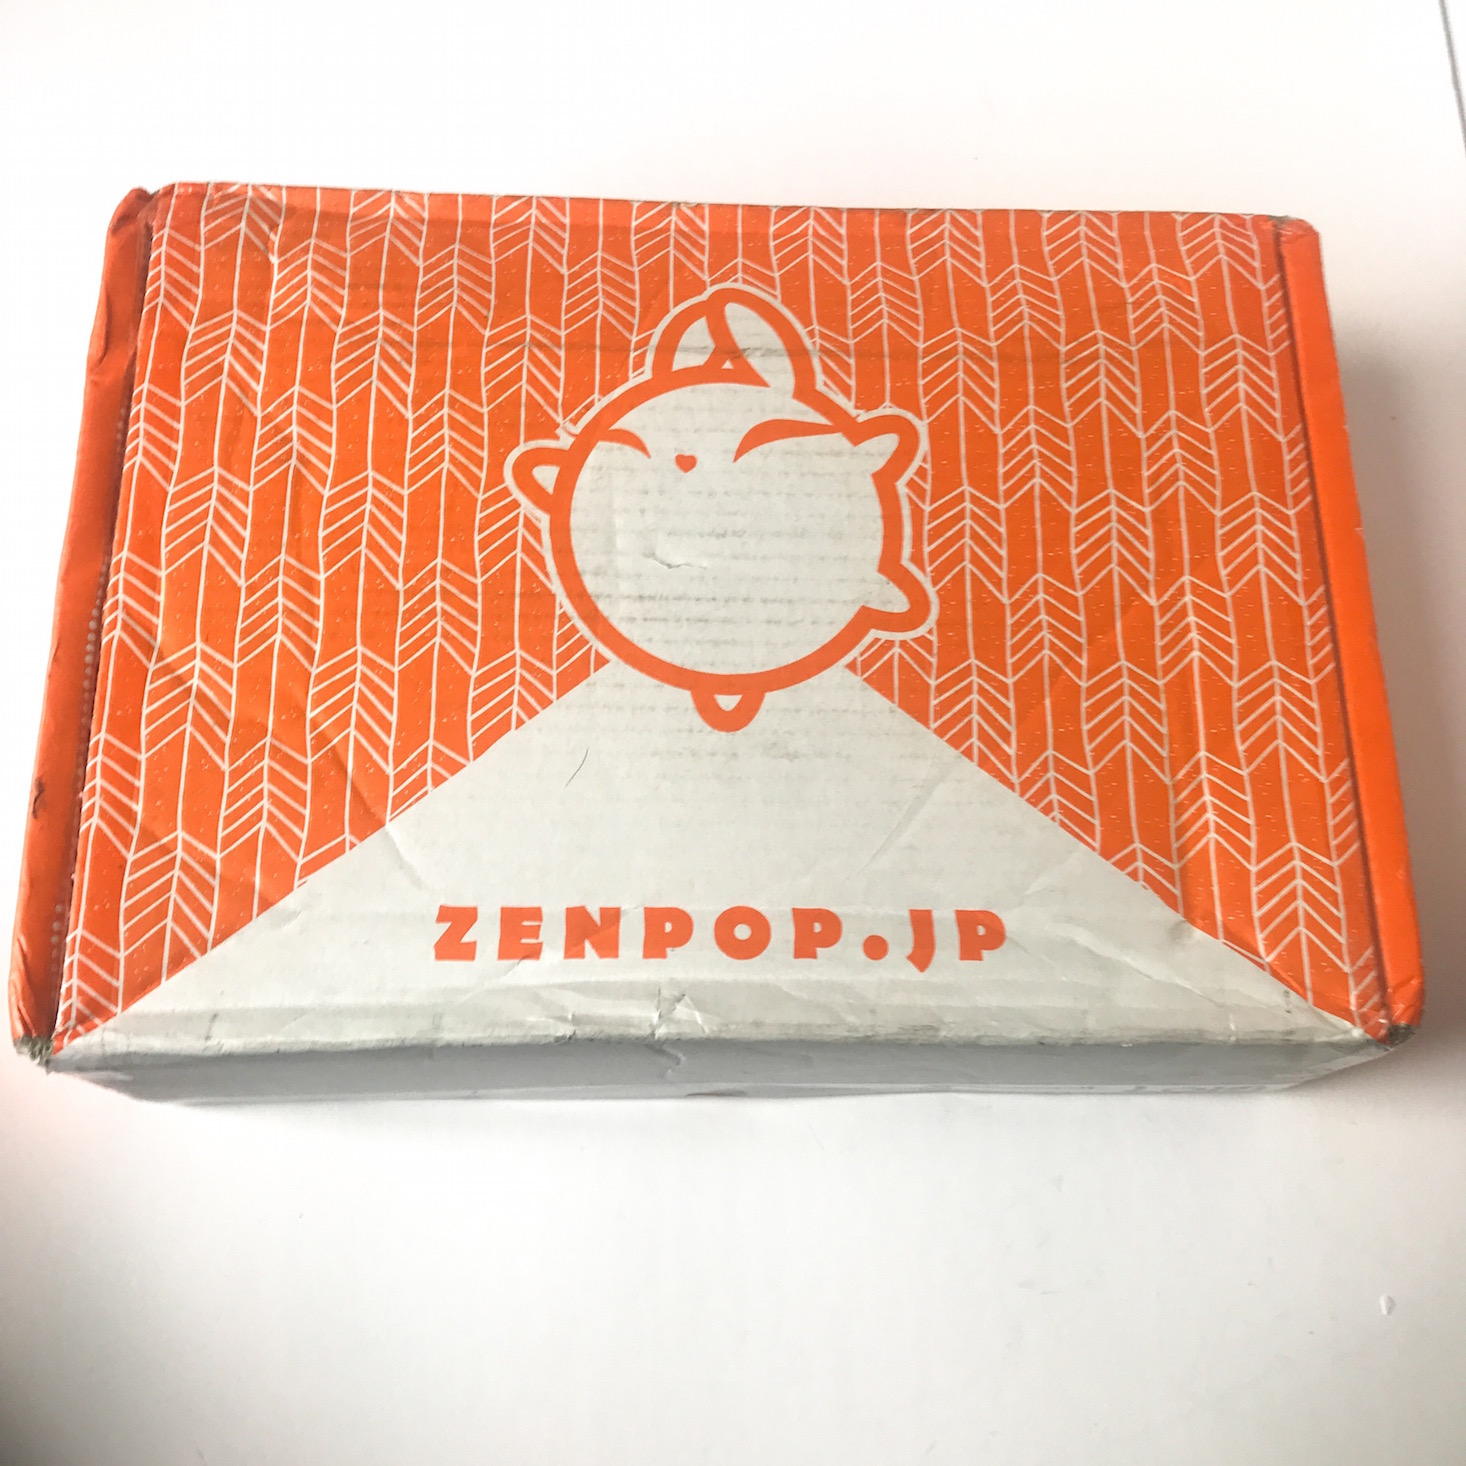 ZenPop Japanese Sweets + Ramen Mix Pack Review – April 2018